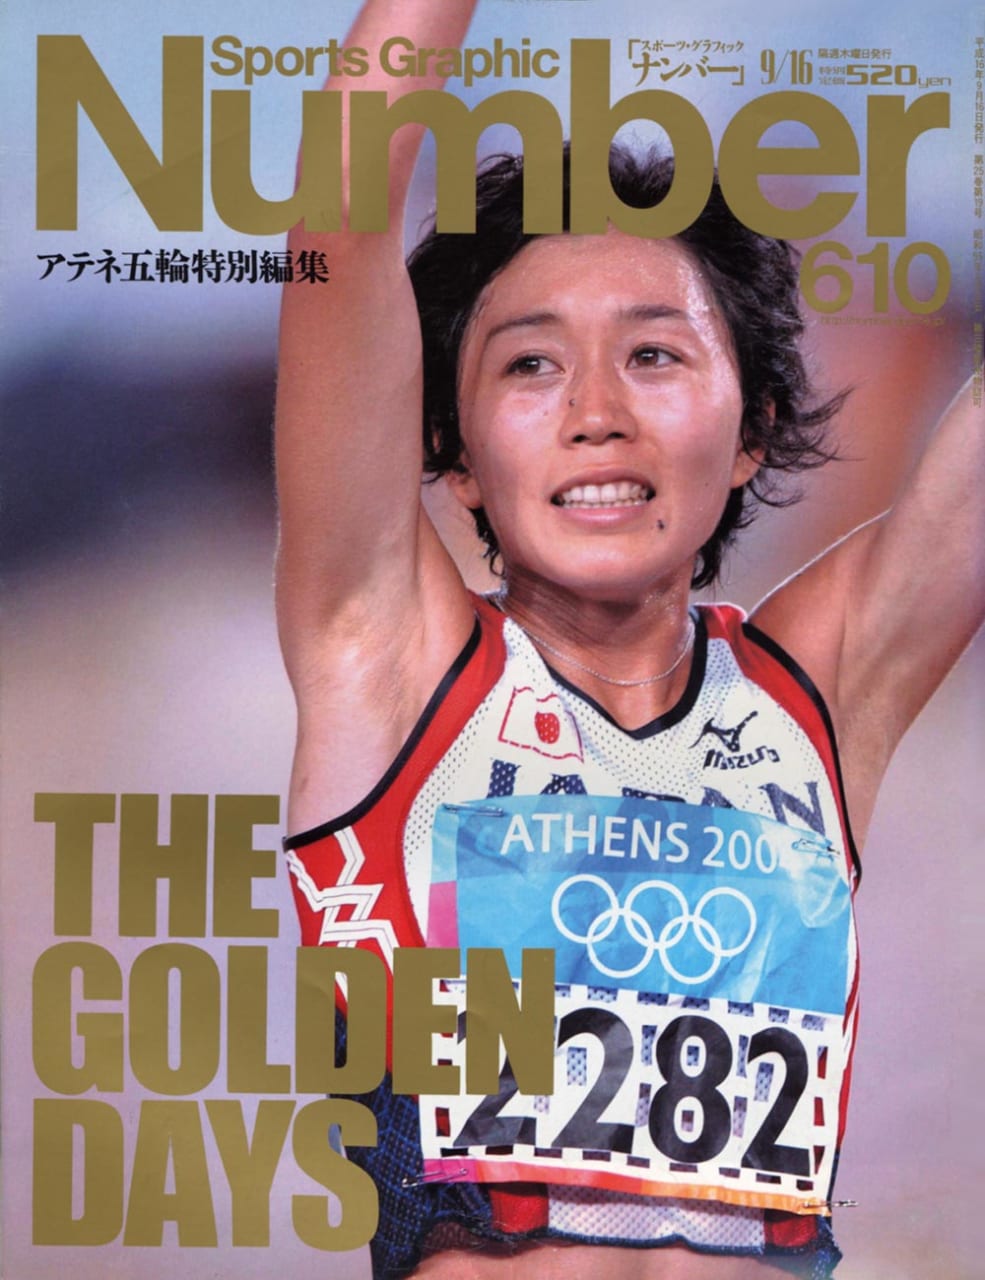 Sports Graphic Number 610号
2004年9月2日発売
表紙撮影：渡辺正和／アフロ・スポーツ